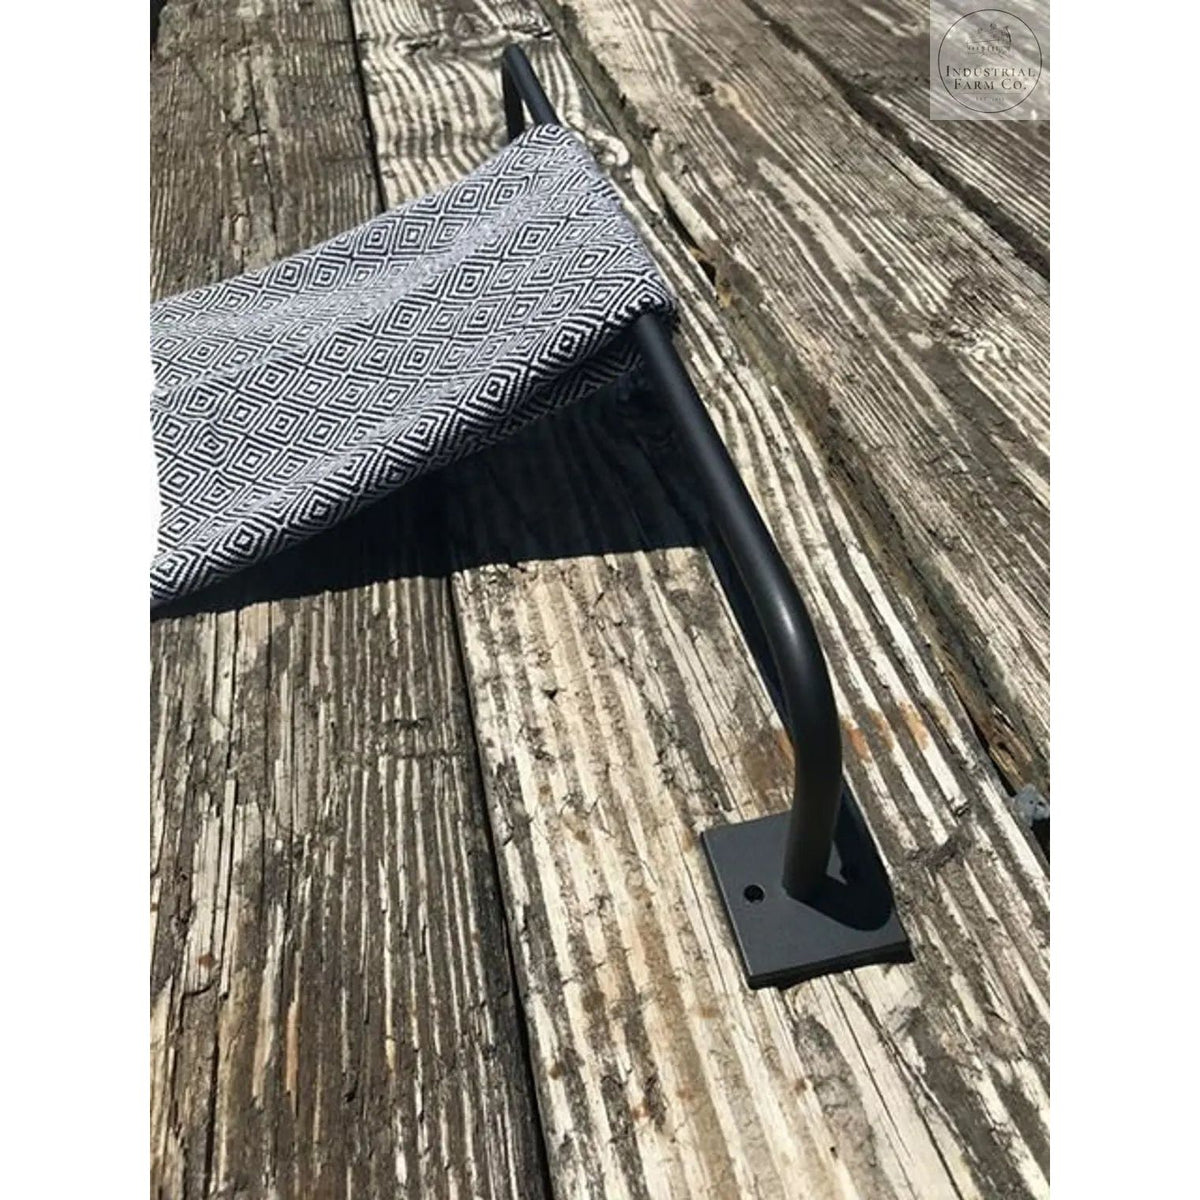 The Split Rock Towel Rack Towel Bar 12&quot; Wall Mount Length Finish Clear Coat | Industrial Farm Co